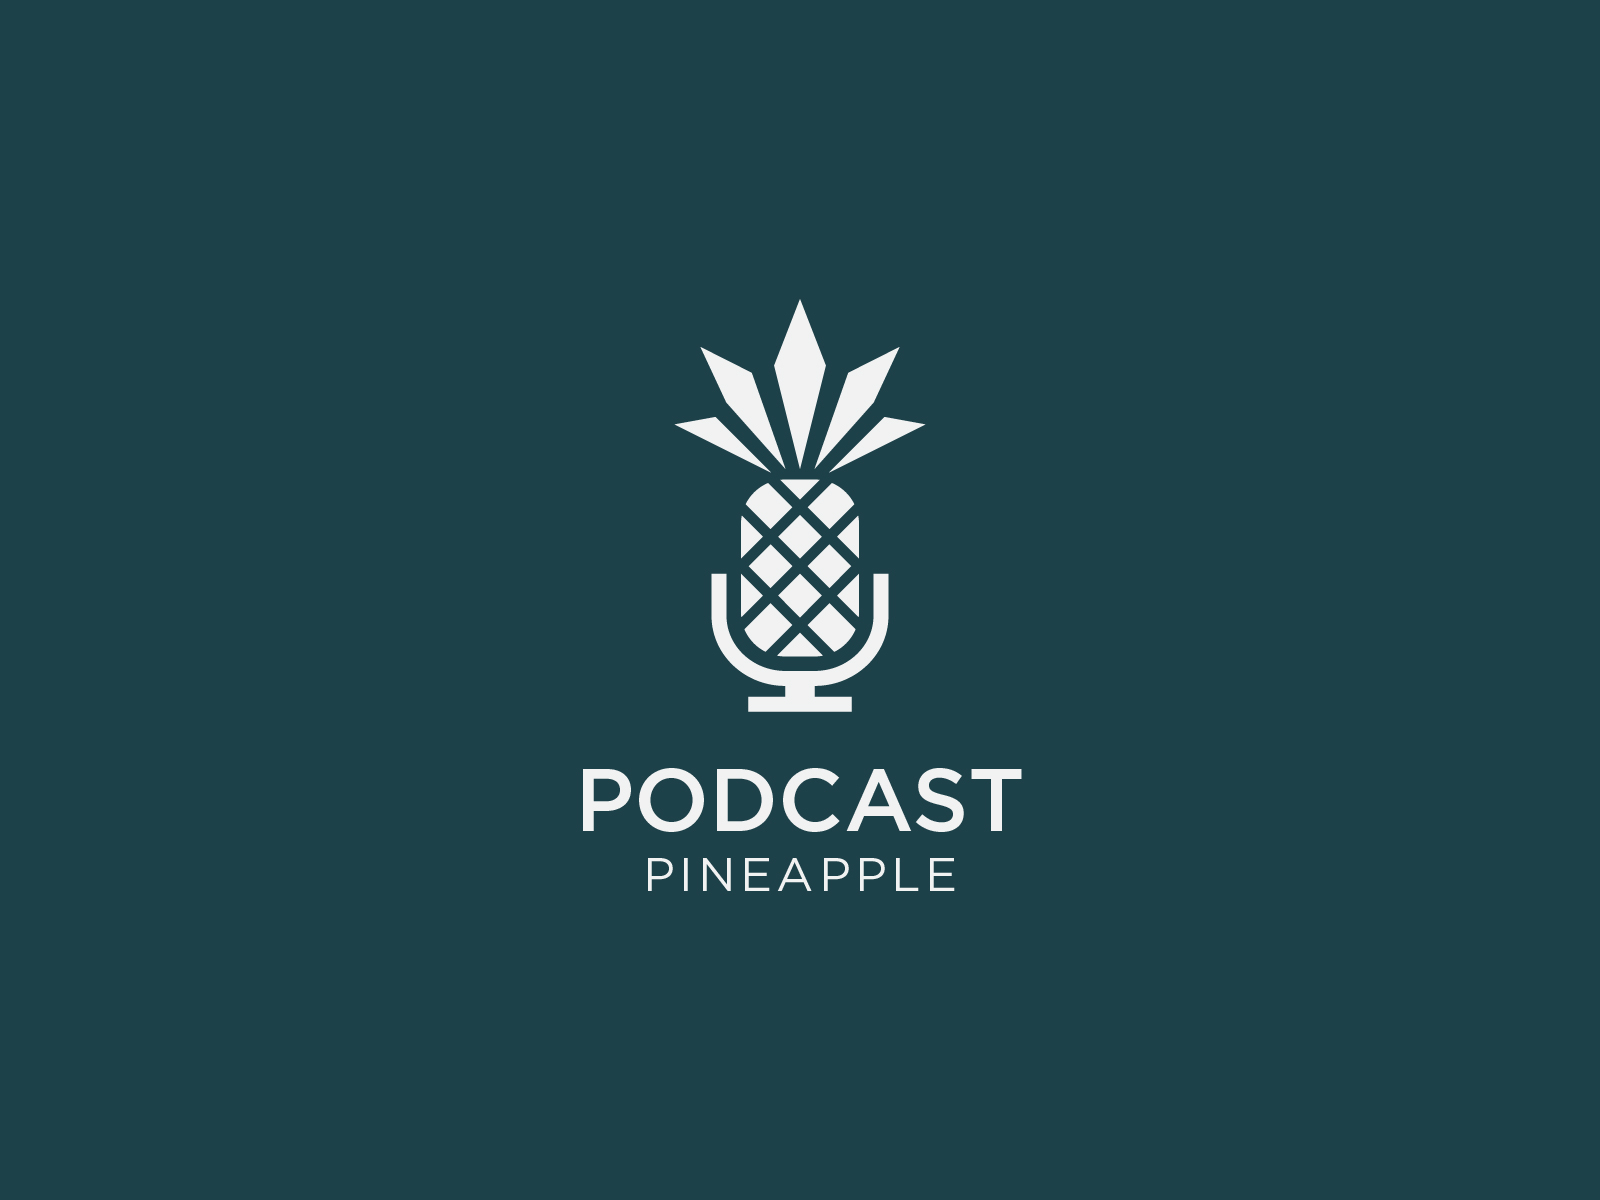 Podcast Pineapple Logo designed by Sugi Binpodo. 